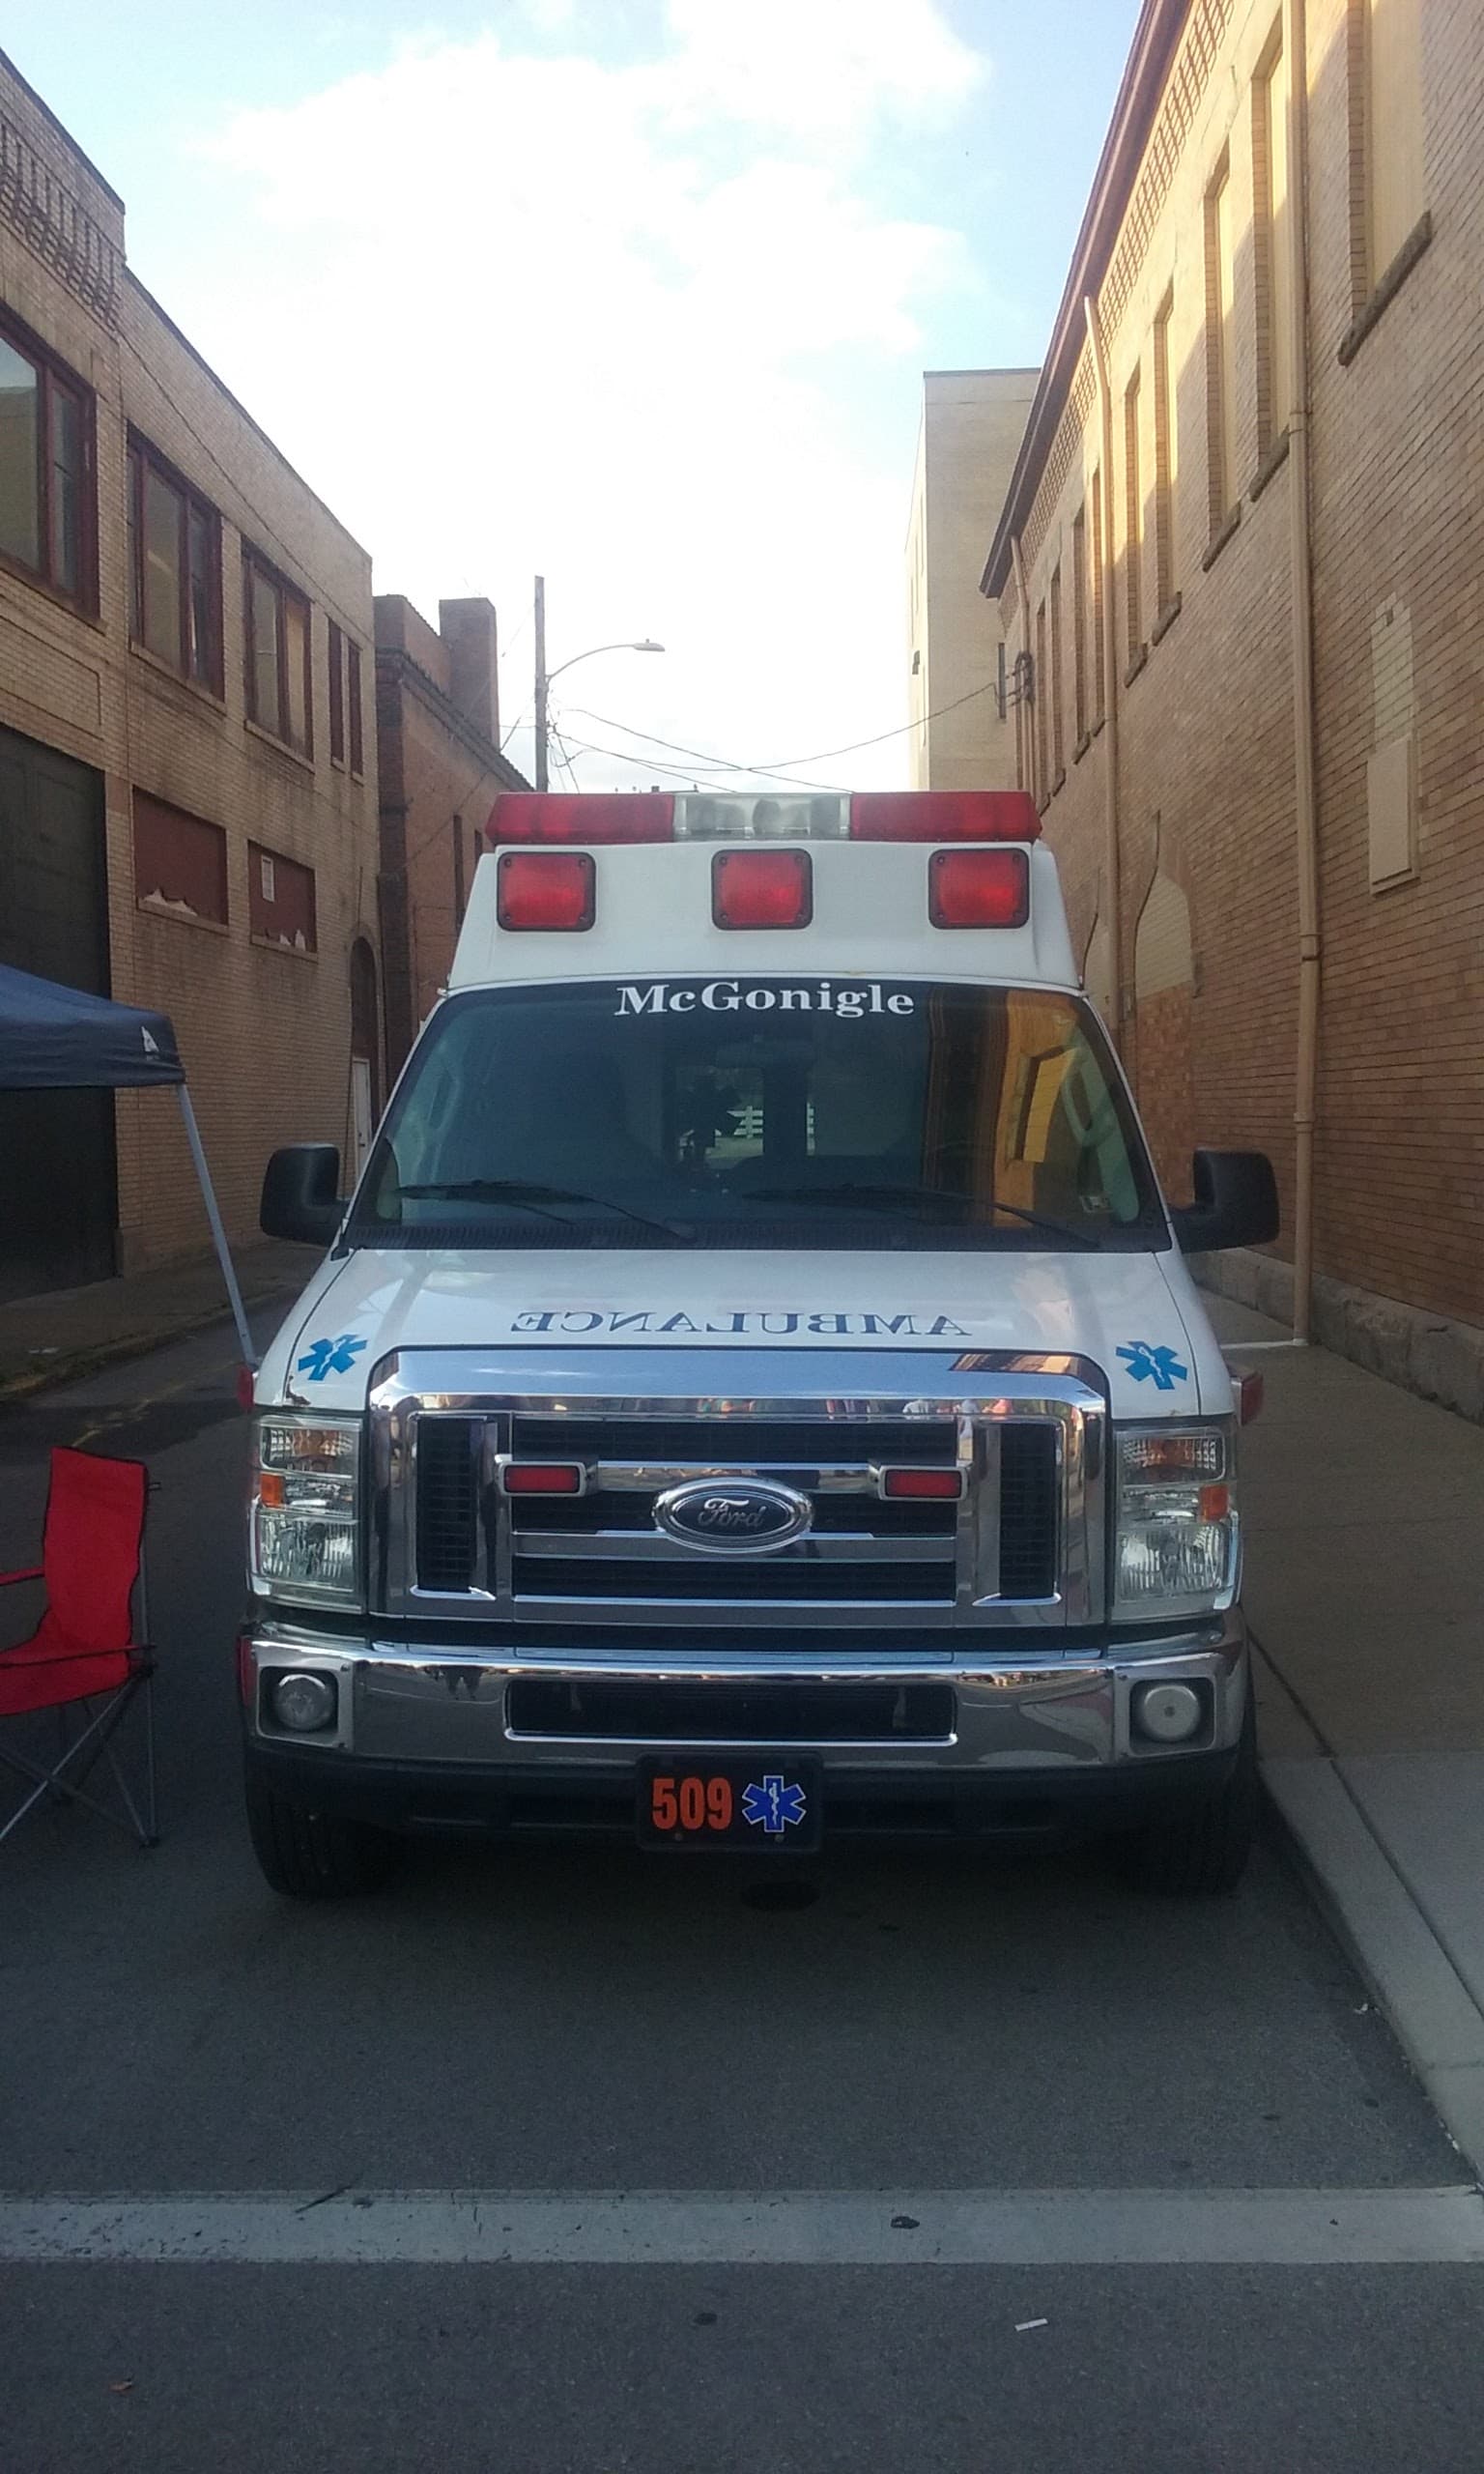 McGonigle Ambulance Service - Hermitage, PA, US, nearest urgent care